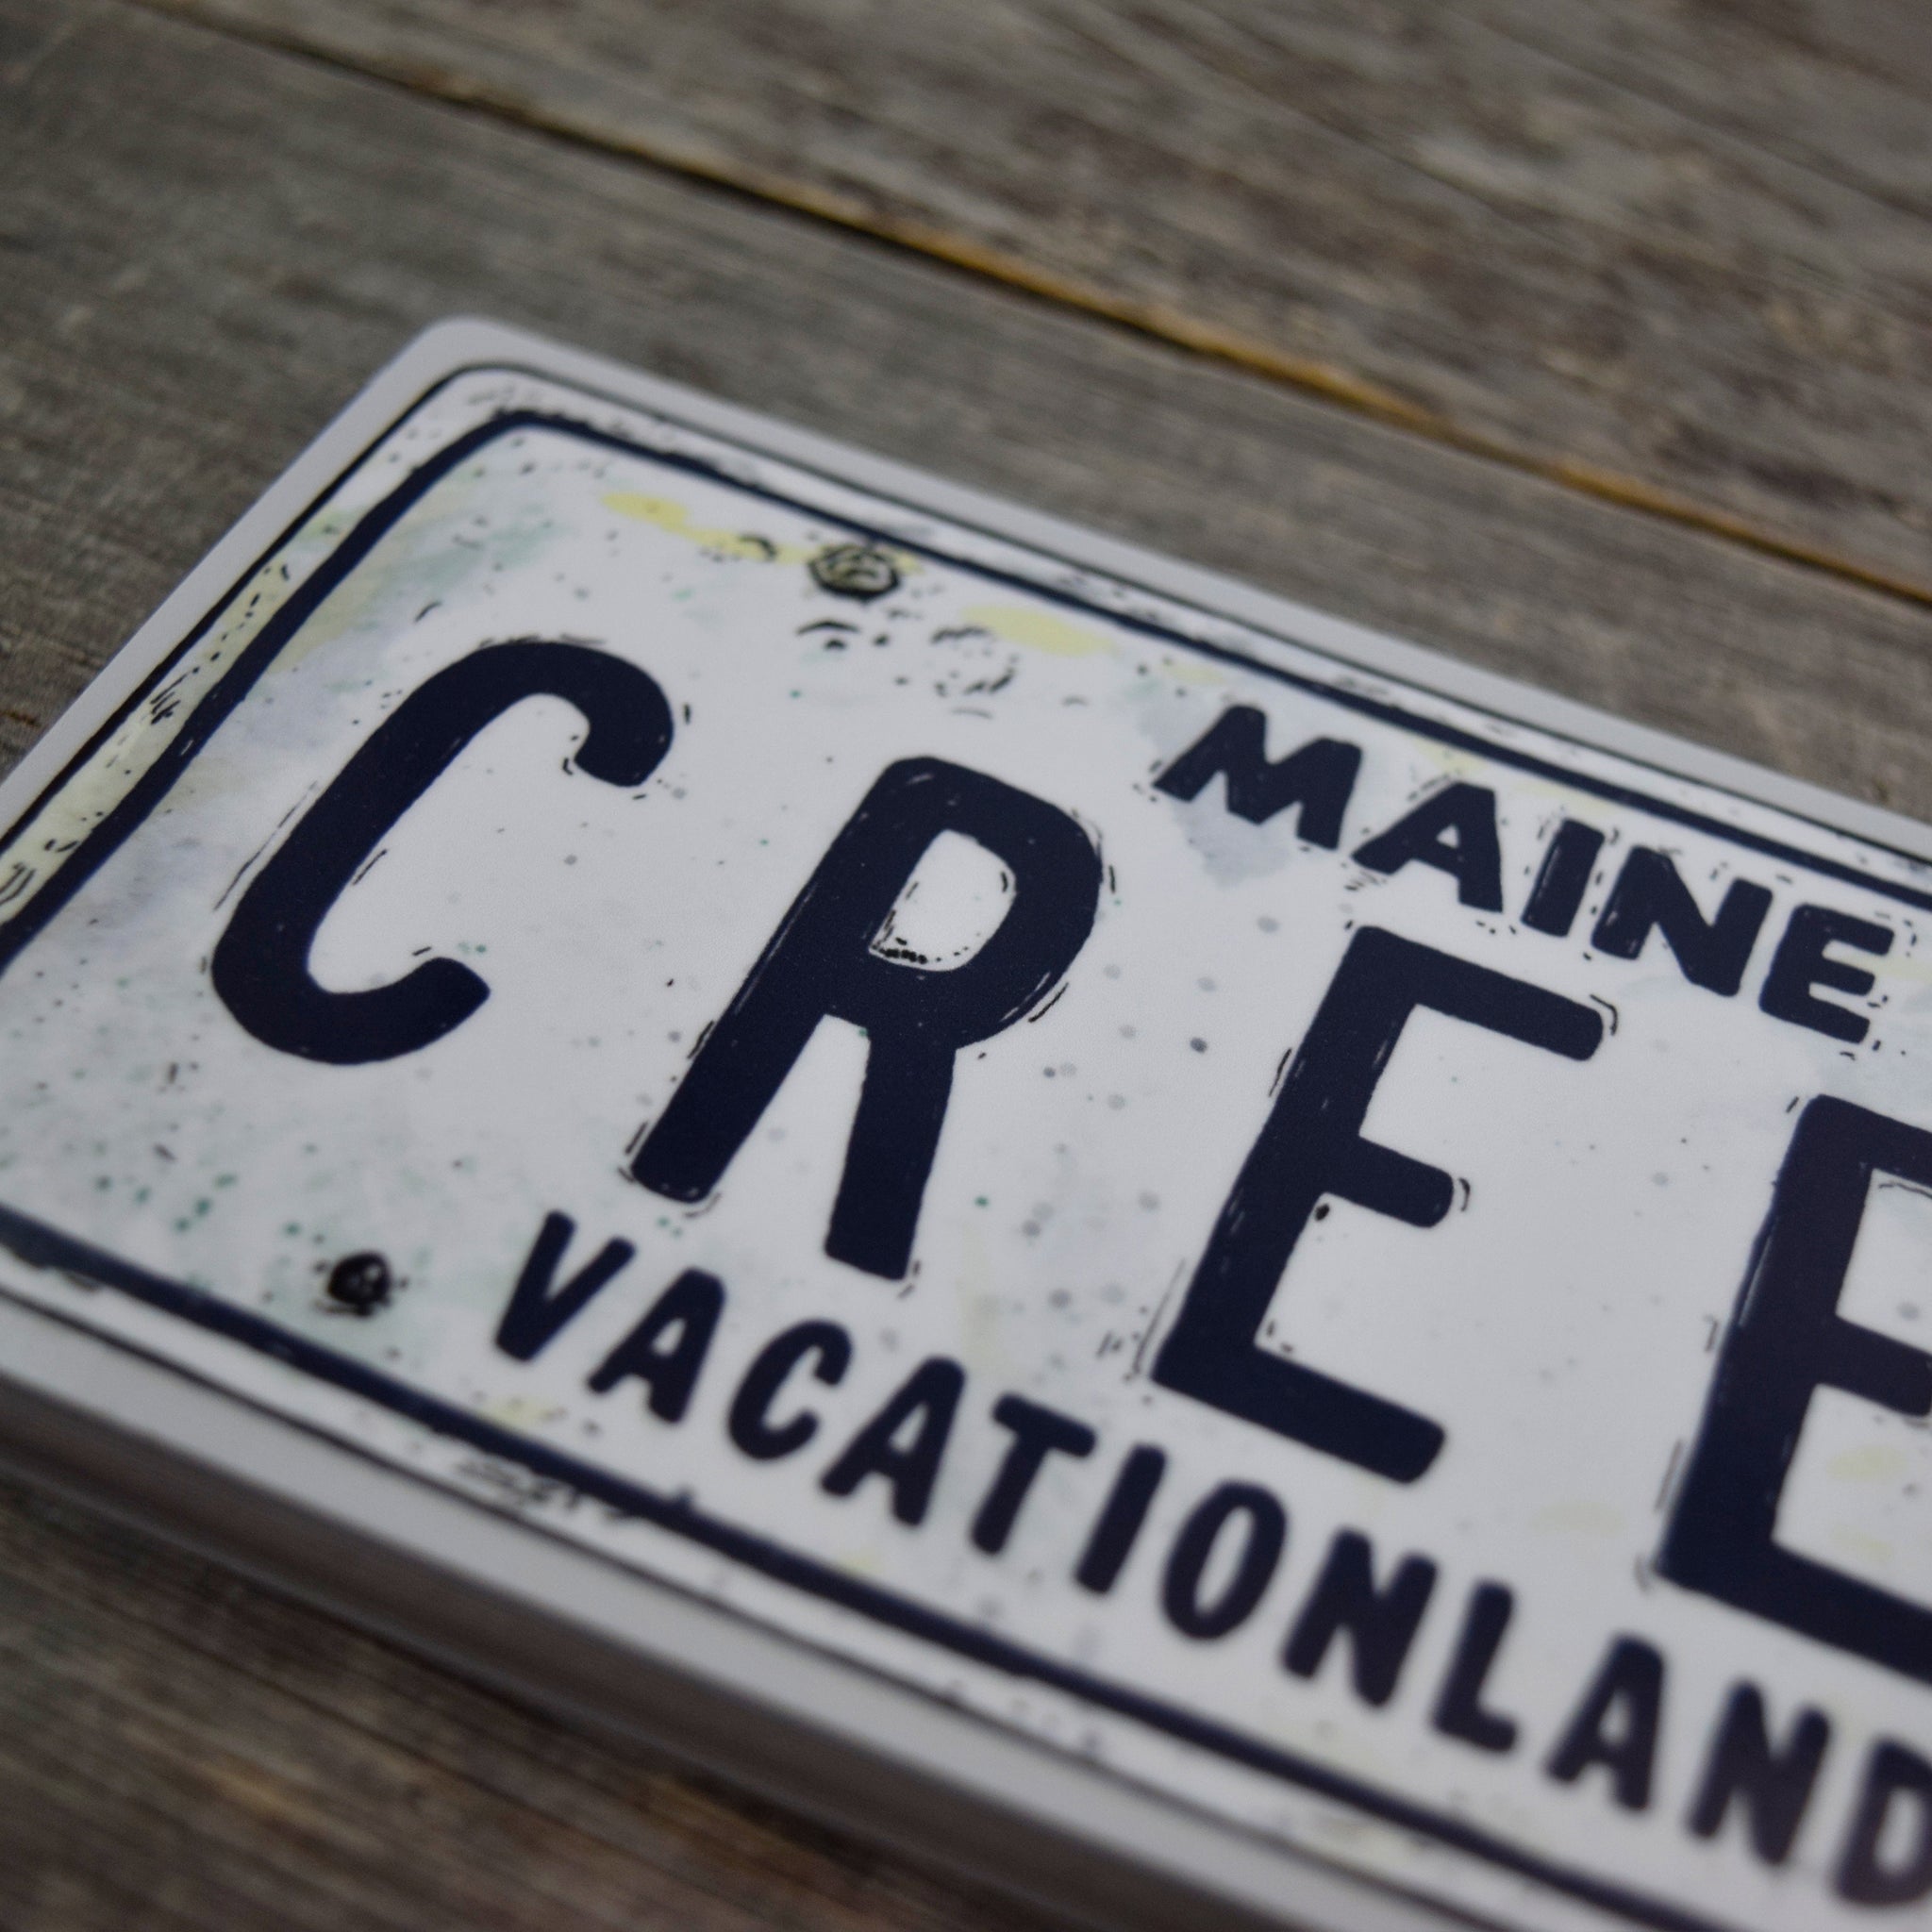 Maine CREEP Vinyl Sticker